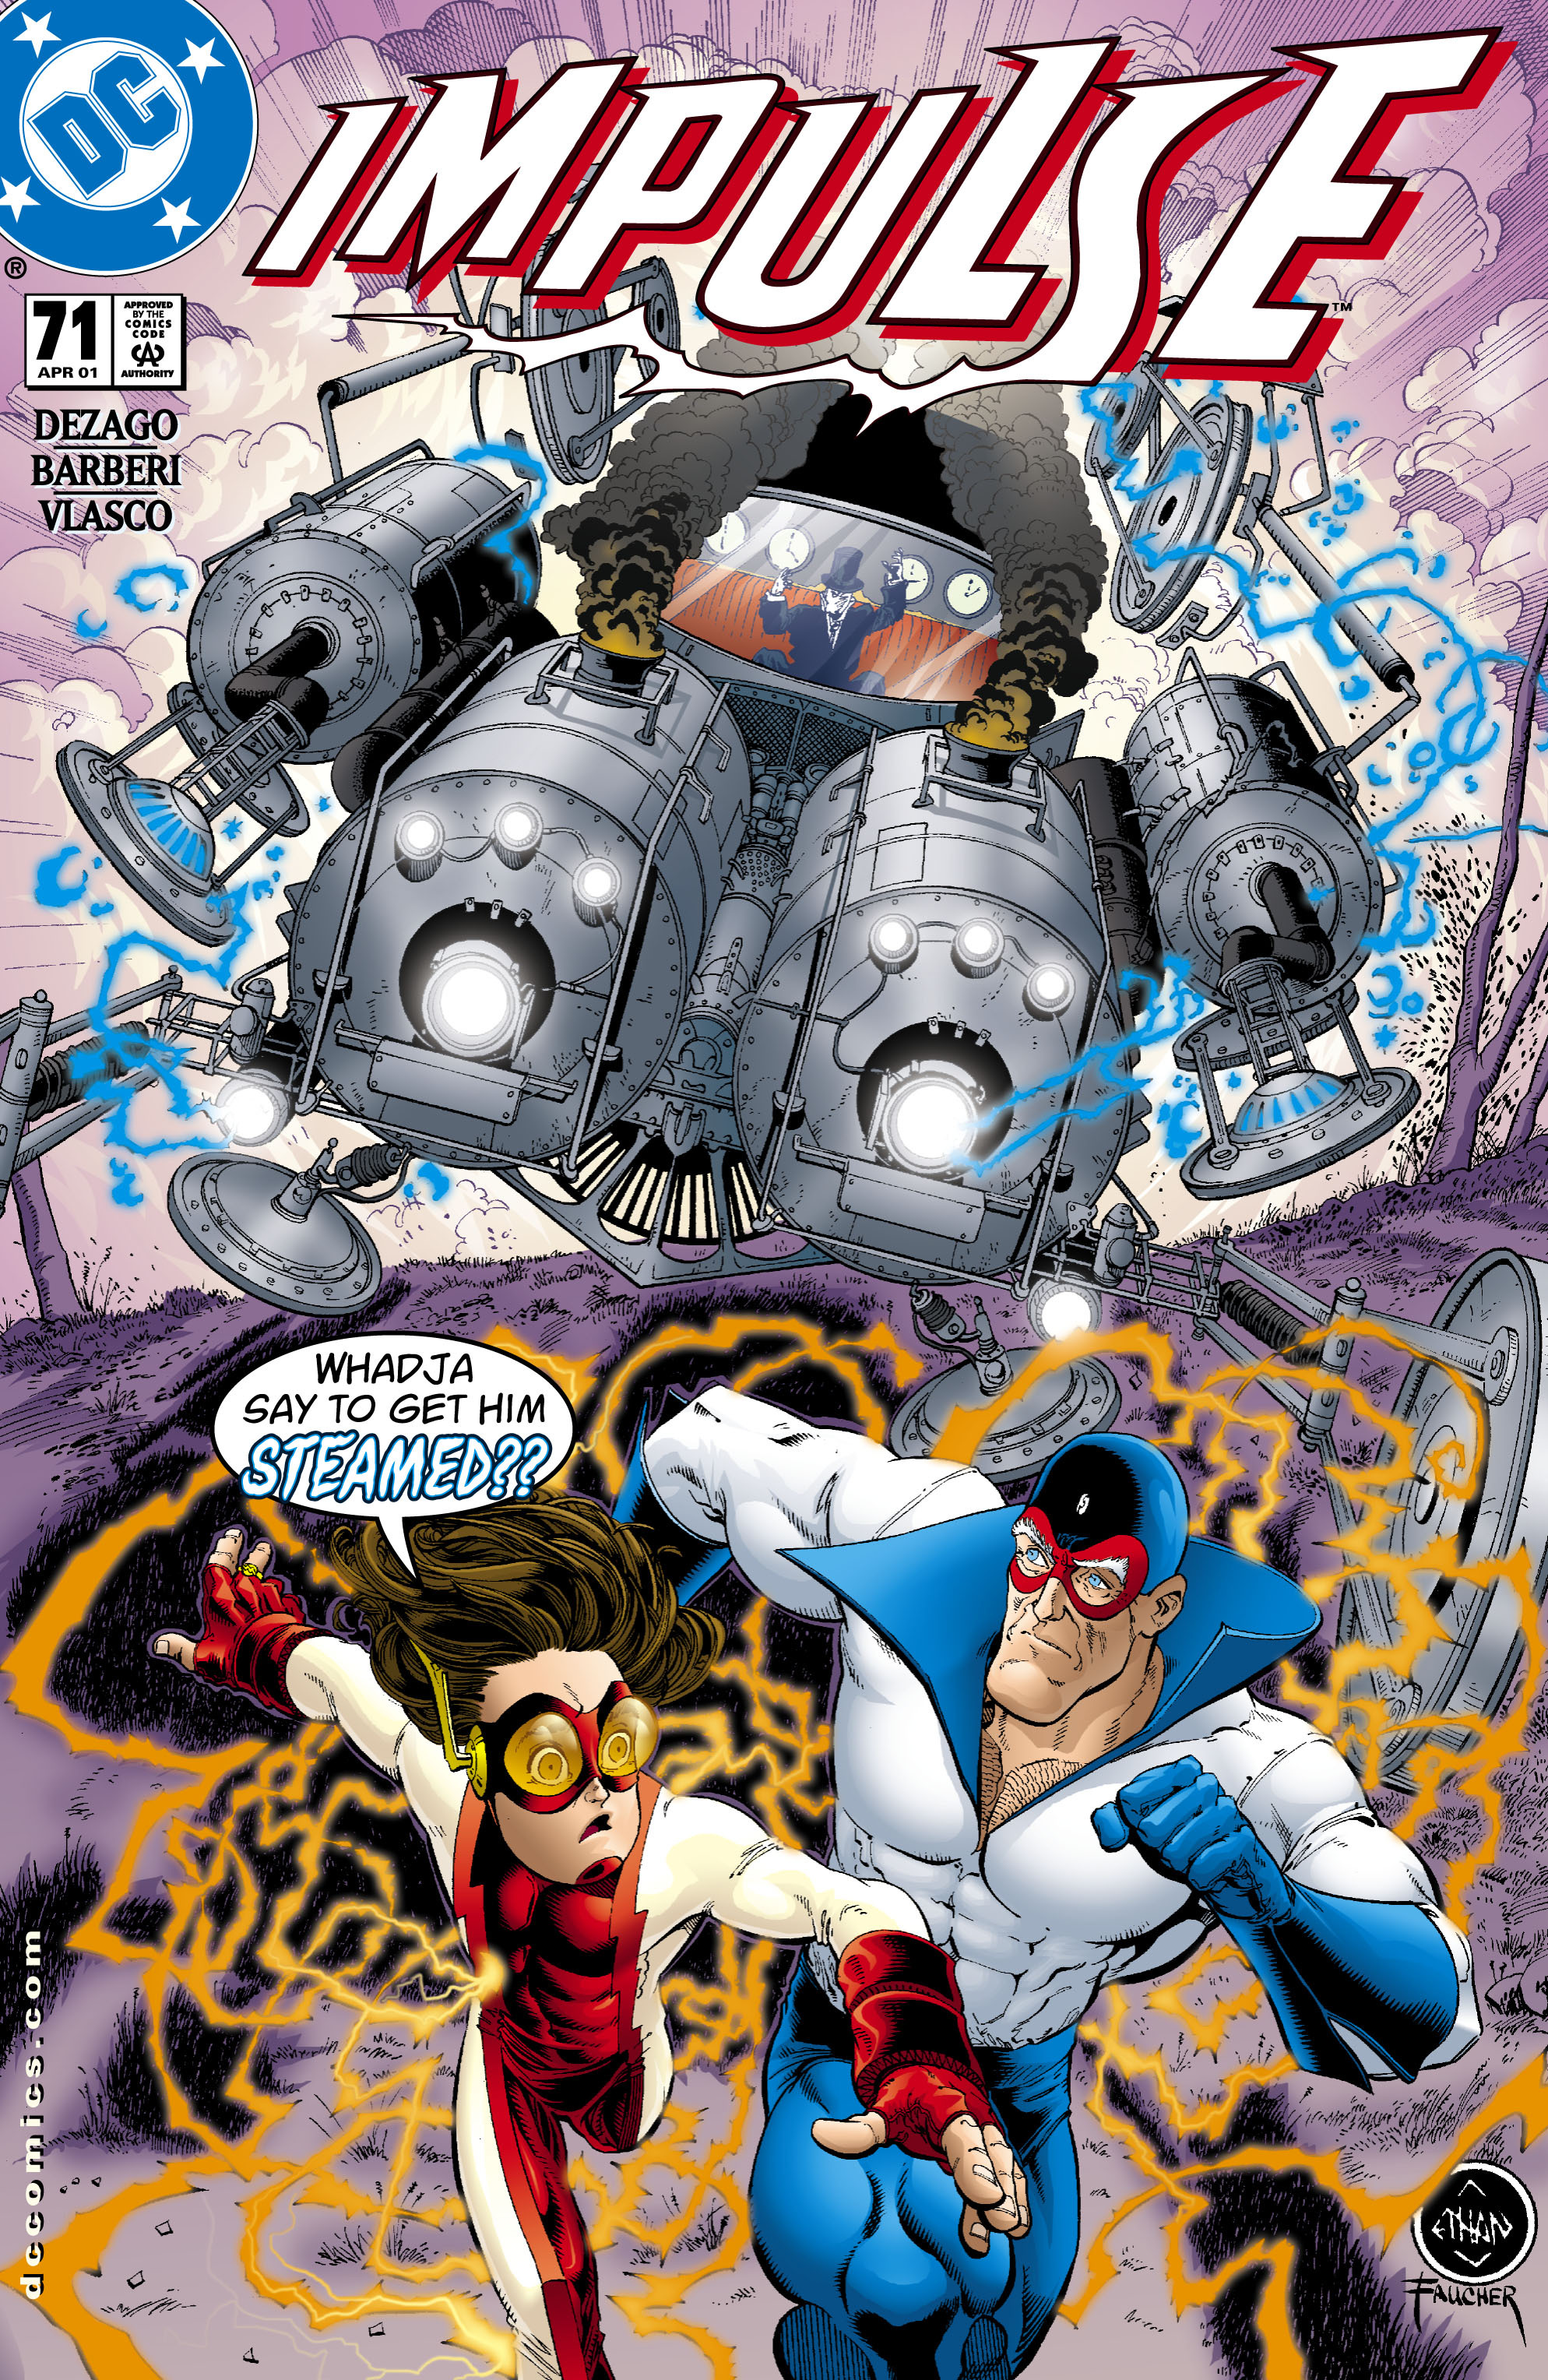 Read online Impulse (1995) comic -  Issue #71 - 1